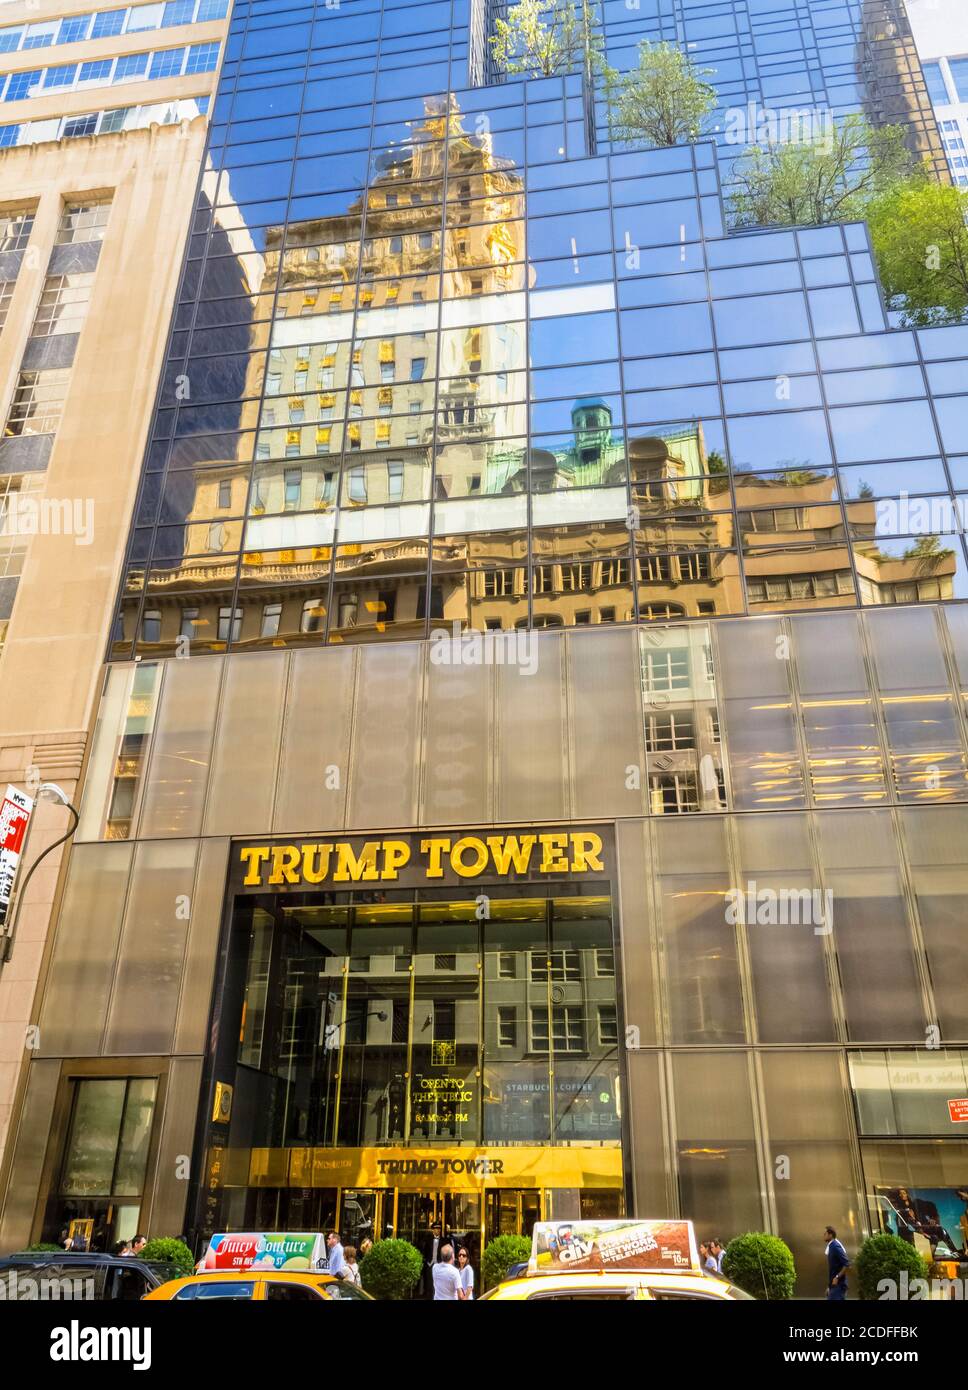 Trump Tower, 721 Fifth Avenue, a landmark skyscraper modern architecture building in Midtown Manhattan, New York City, New York, USA Stock Photo